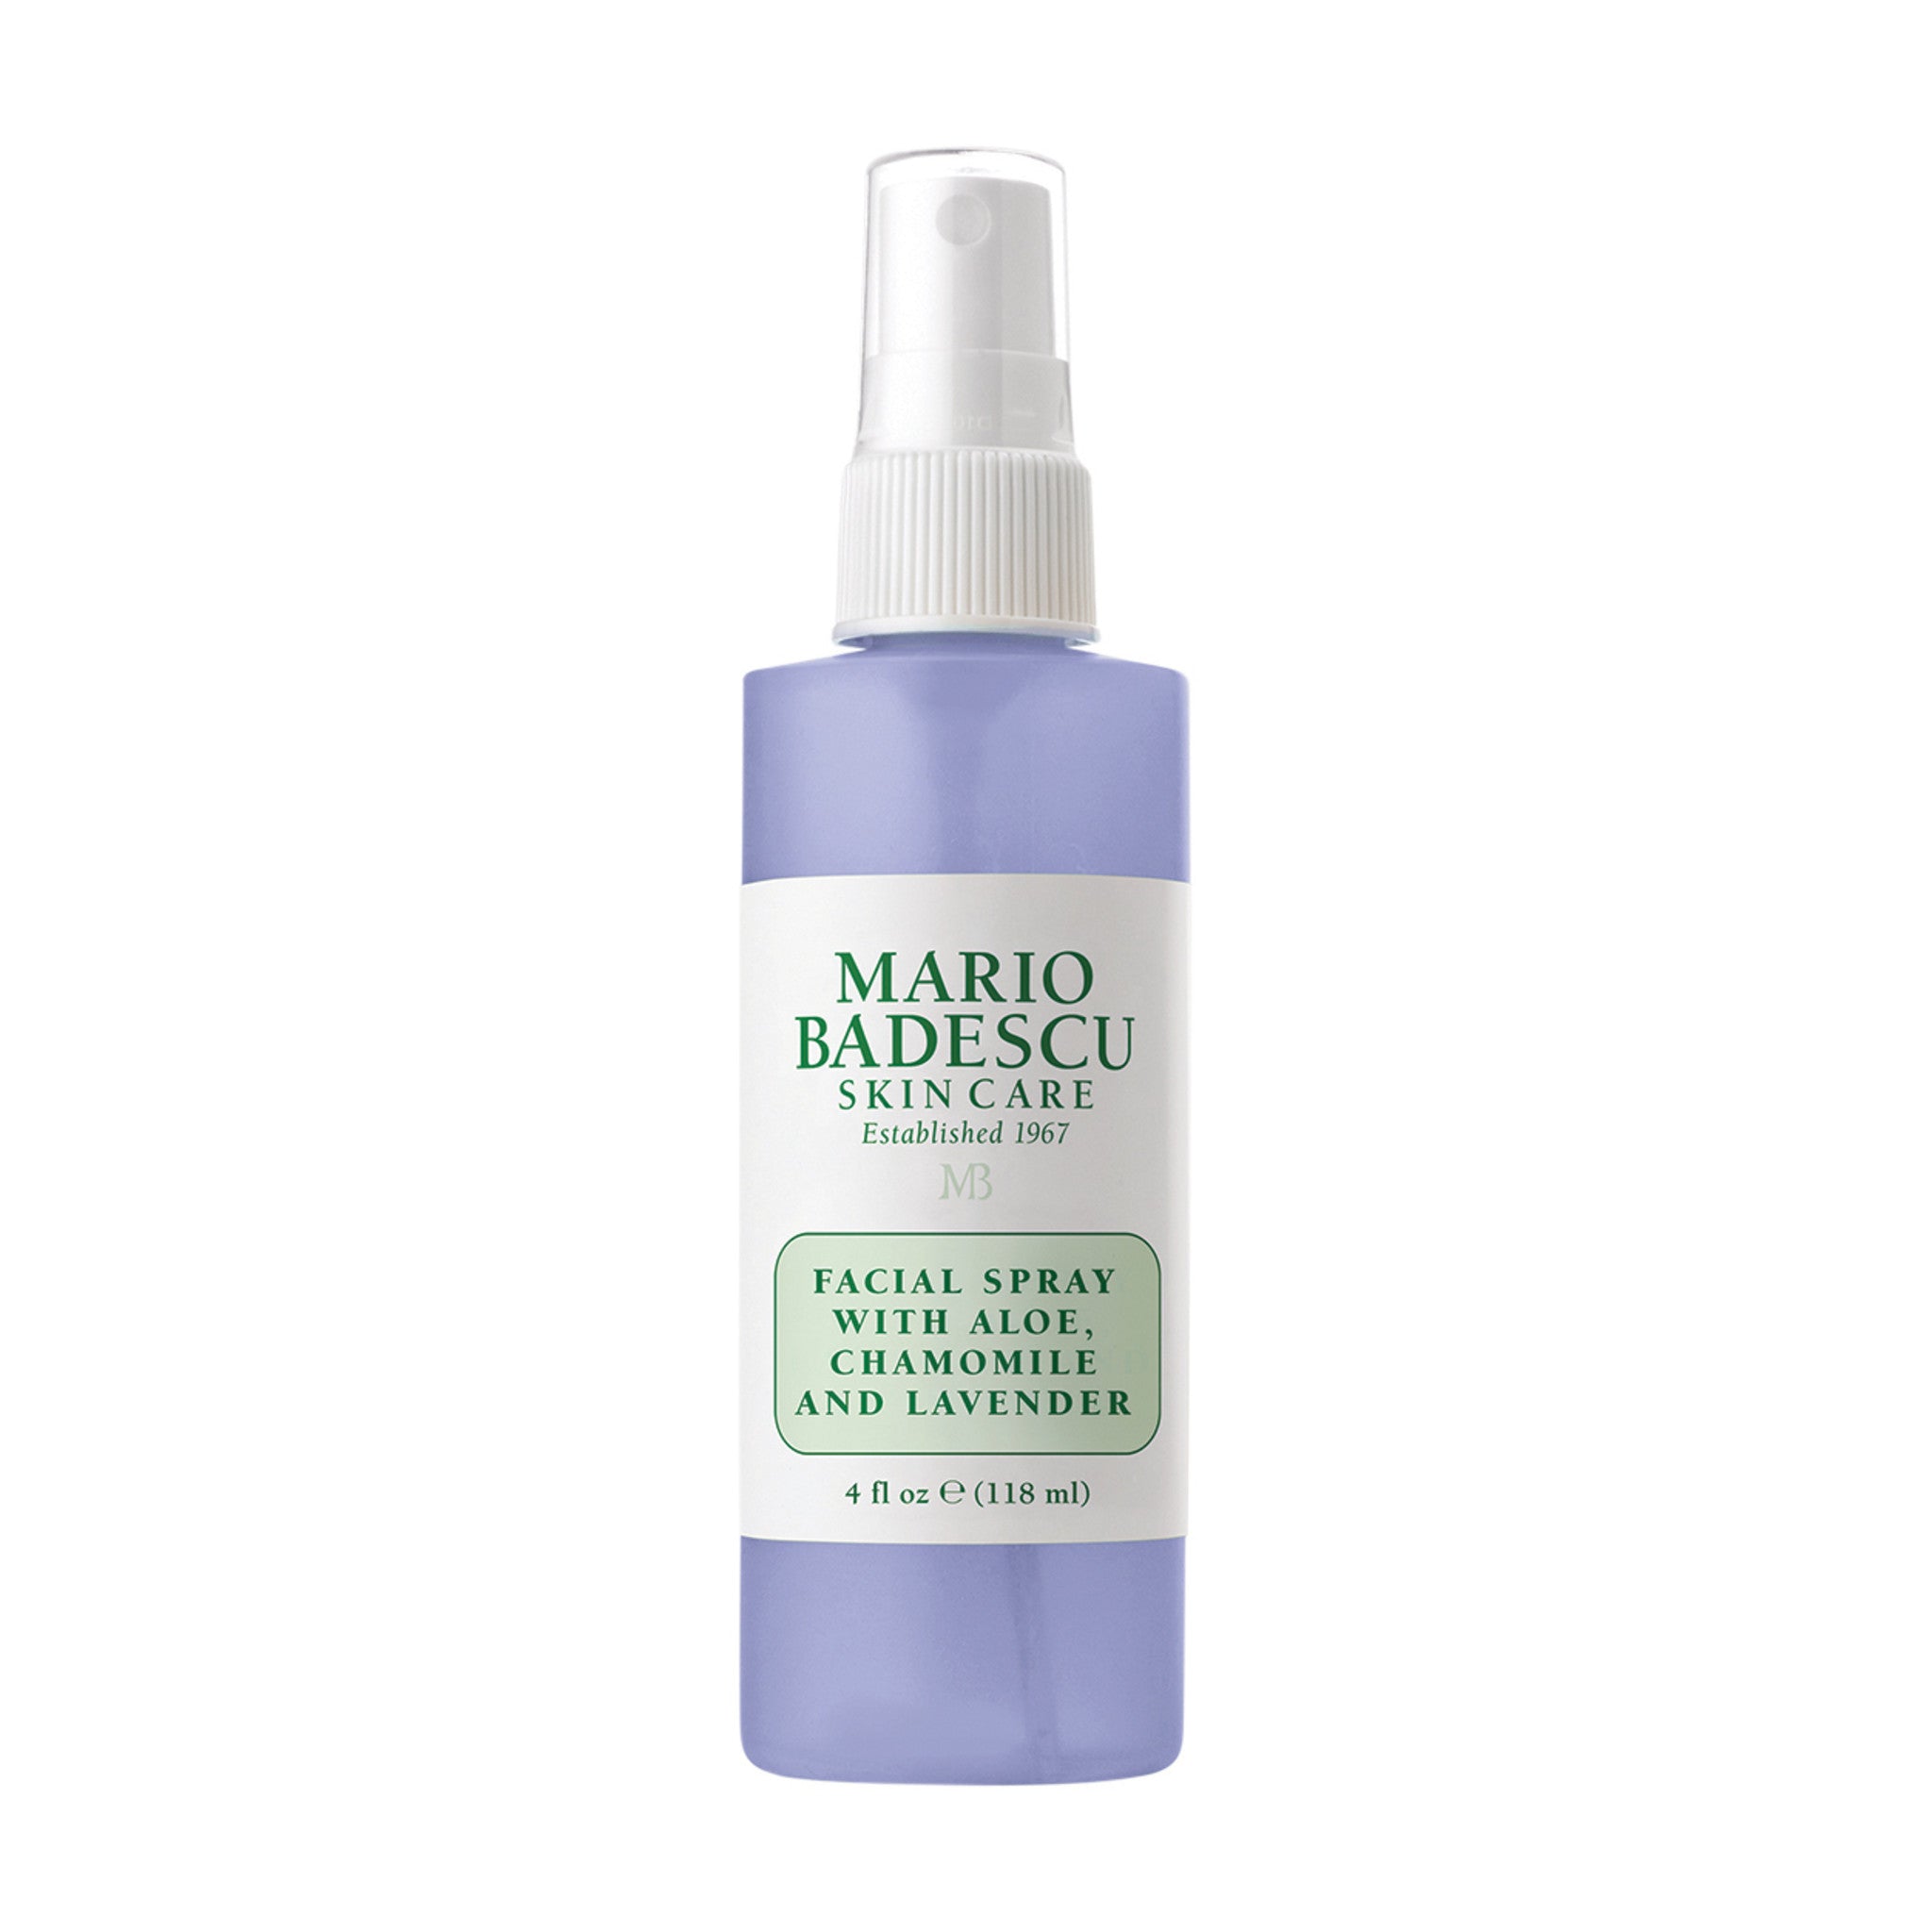 Mario Badescu Facial Spray With Aloe, Chamomile and Lavender Size variant: 4 oz main image.